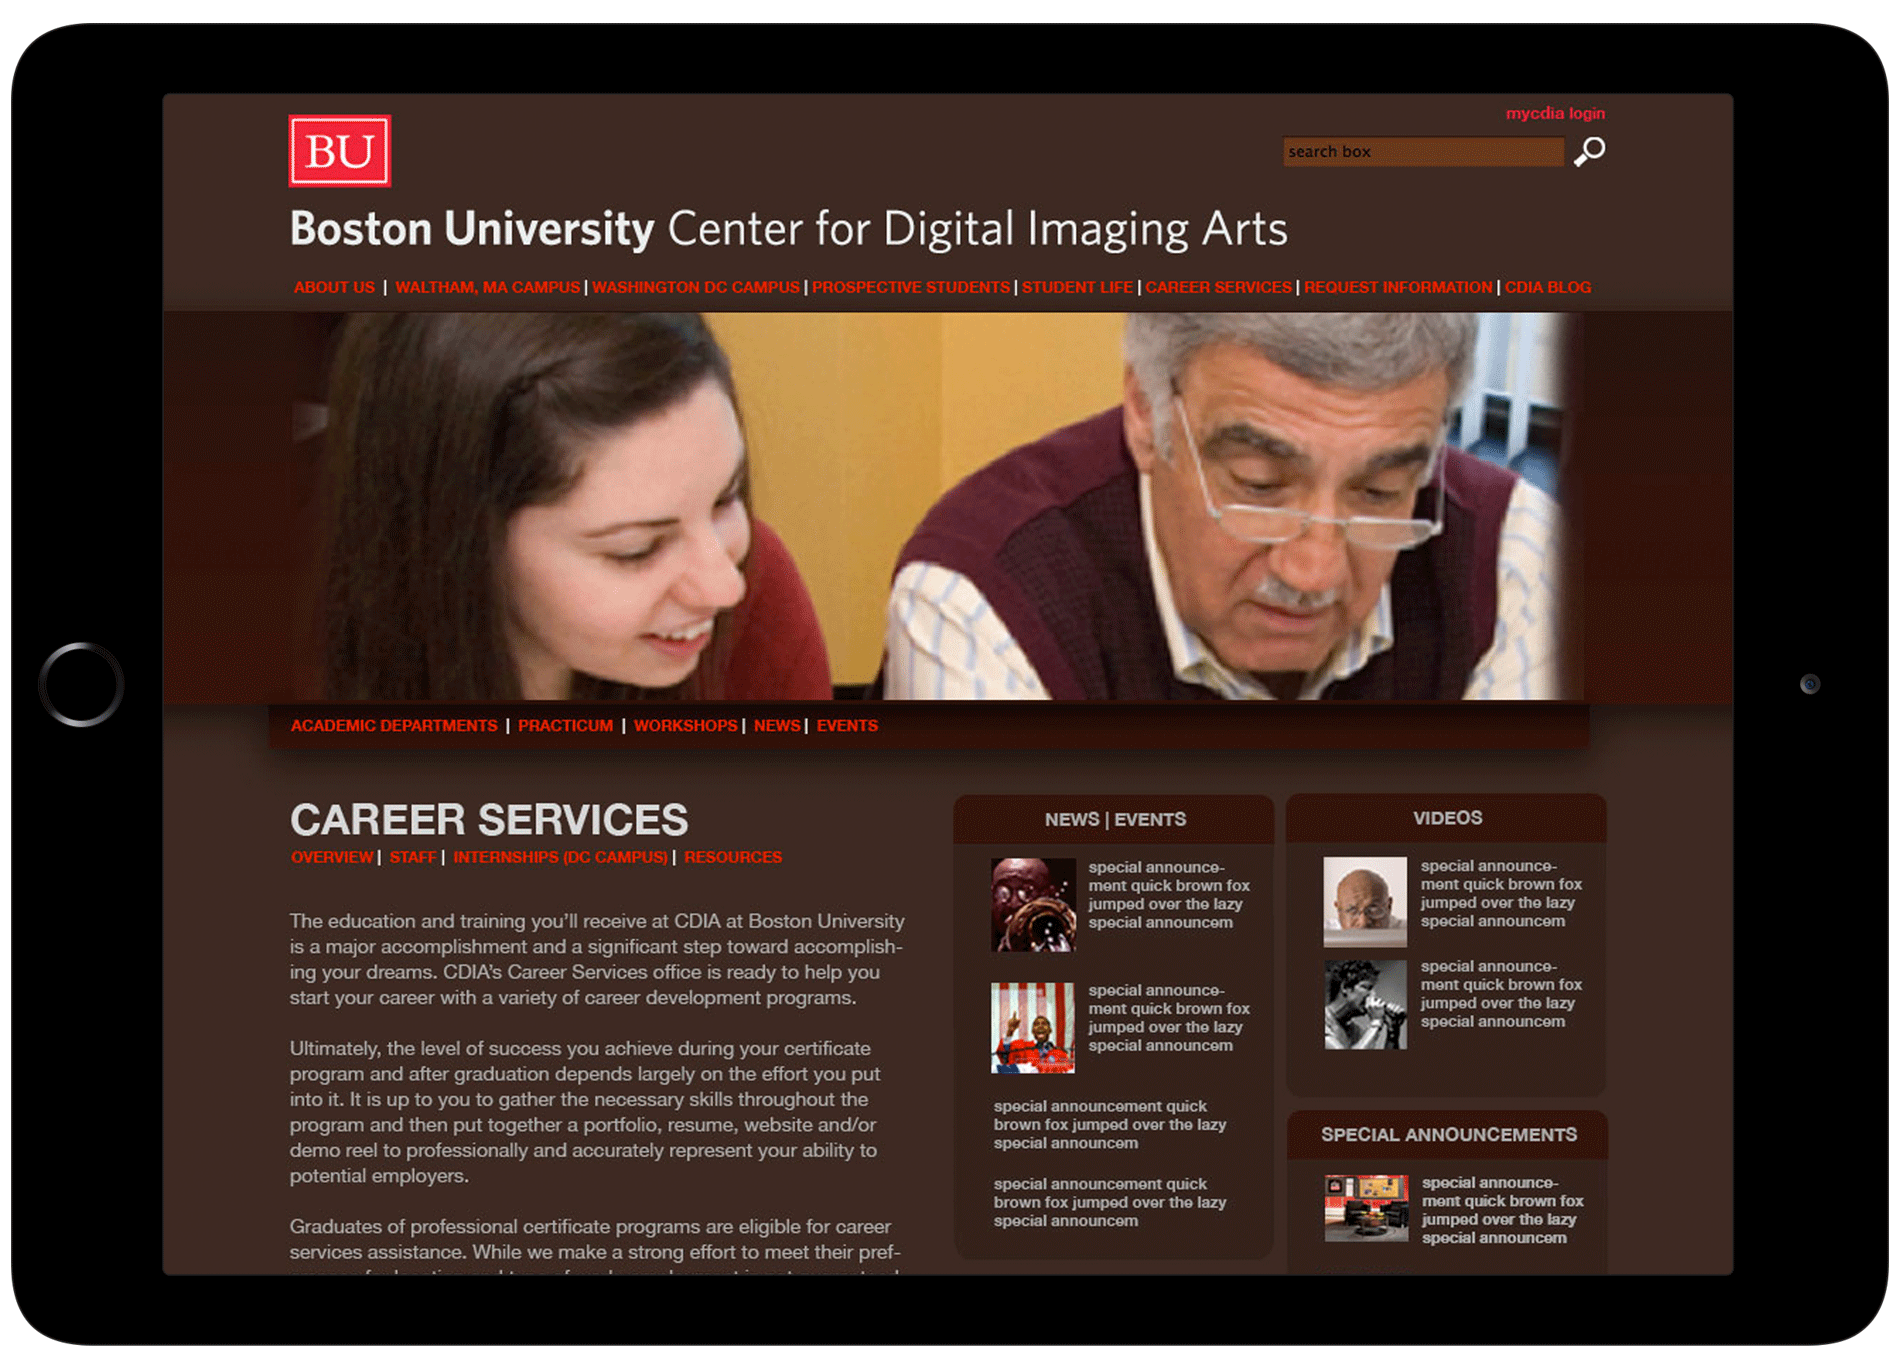 Boston University Center for Digital Imaging Arts web design design 4 image in ipad